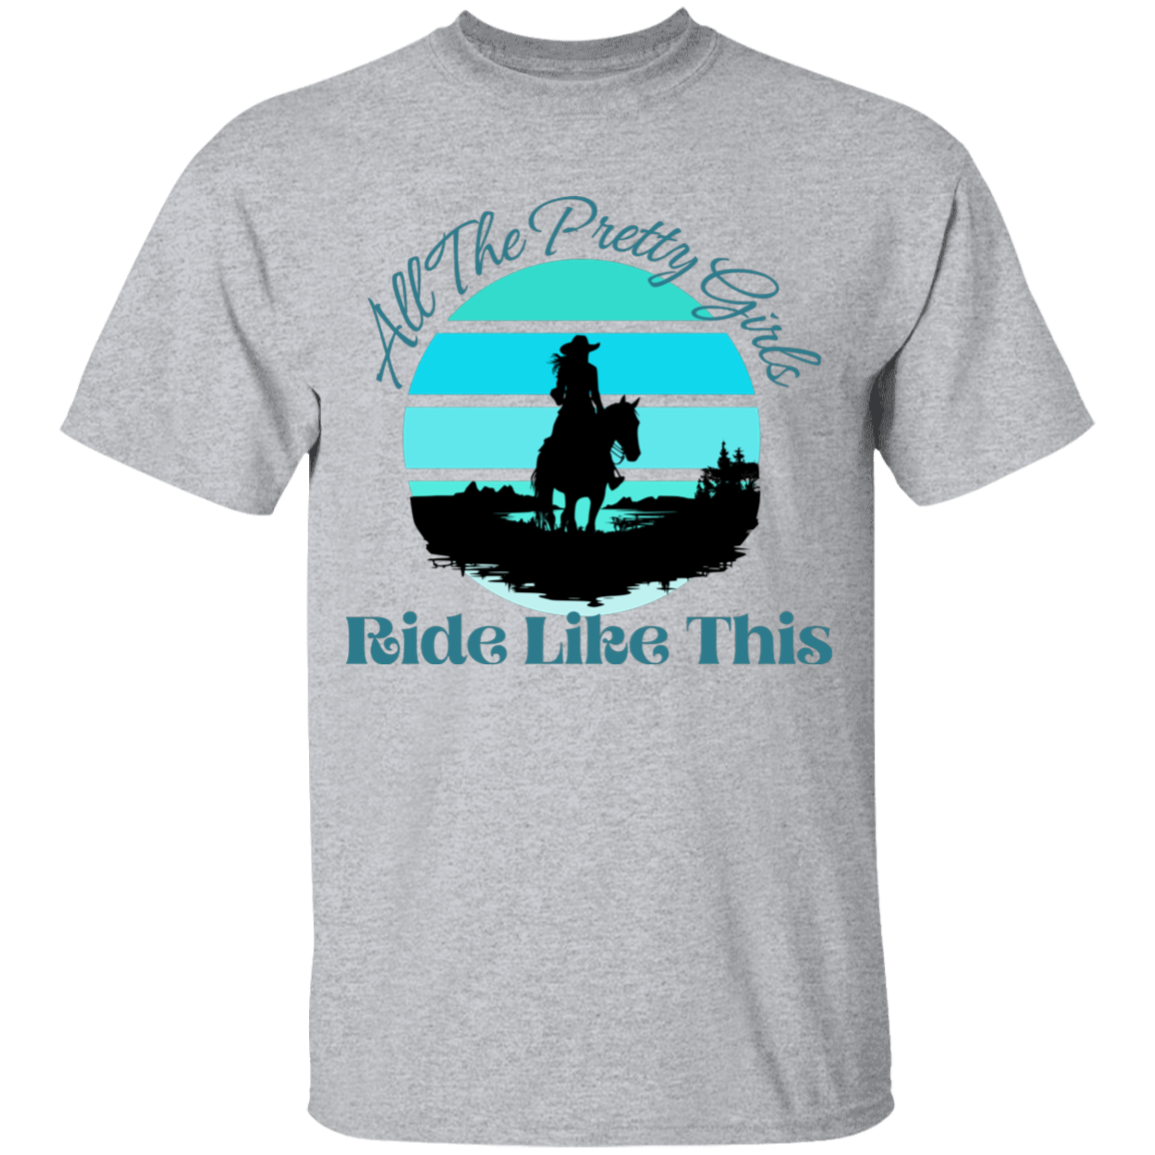 All The Pretty Girls Ride Like This Girls T-Shirt